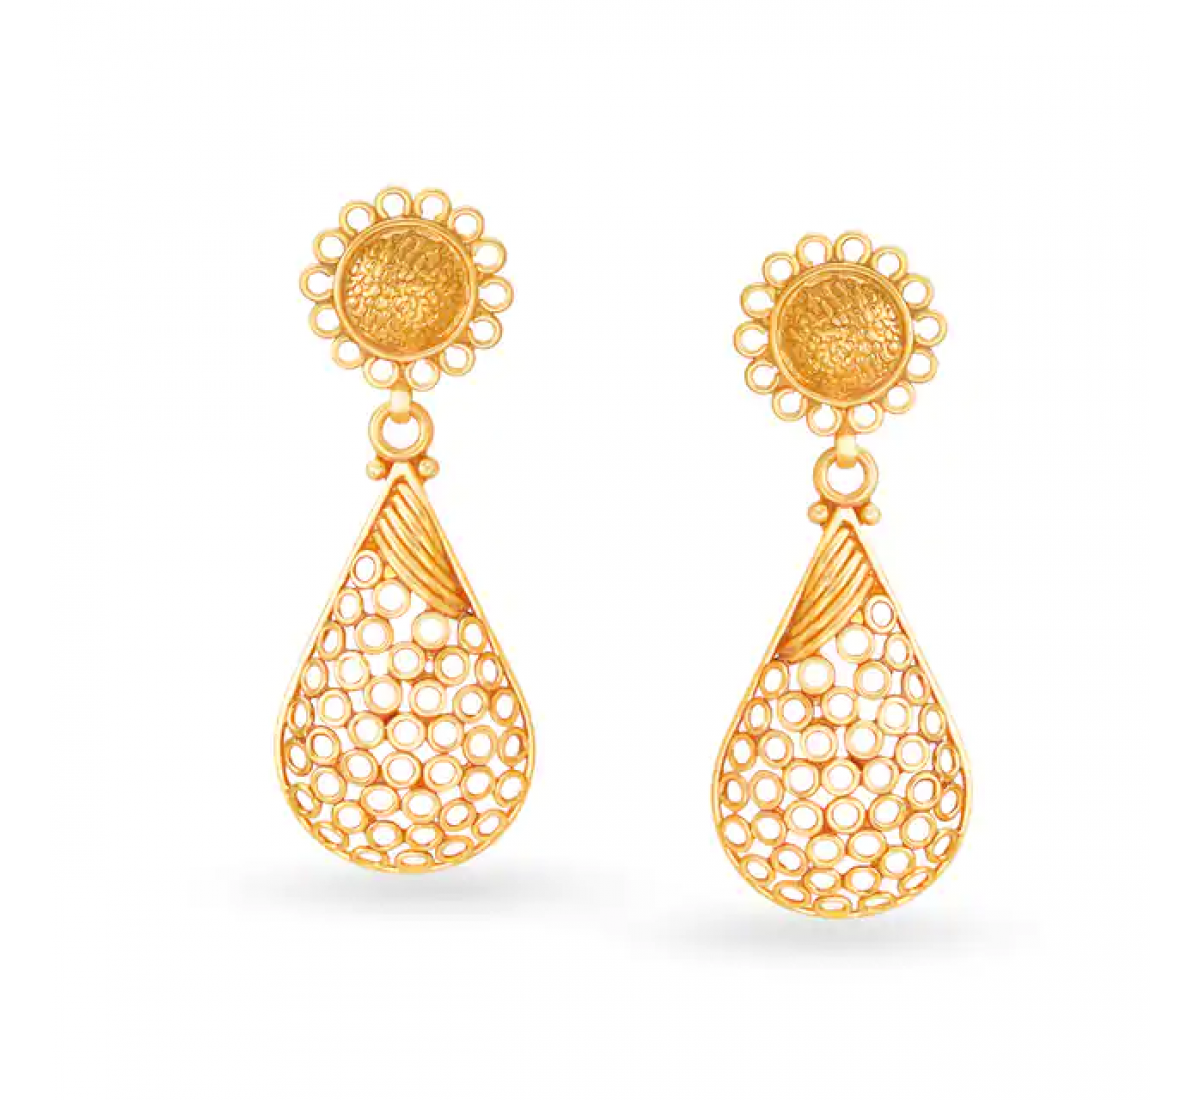 Buy DropsDangle Earrings Online  Gold Drops Earrings Designs  KuberBox   KuberBoxcom